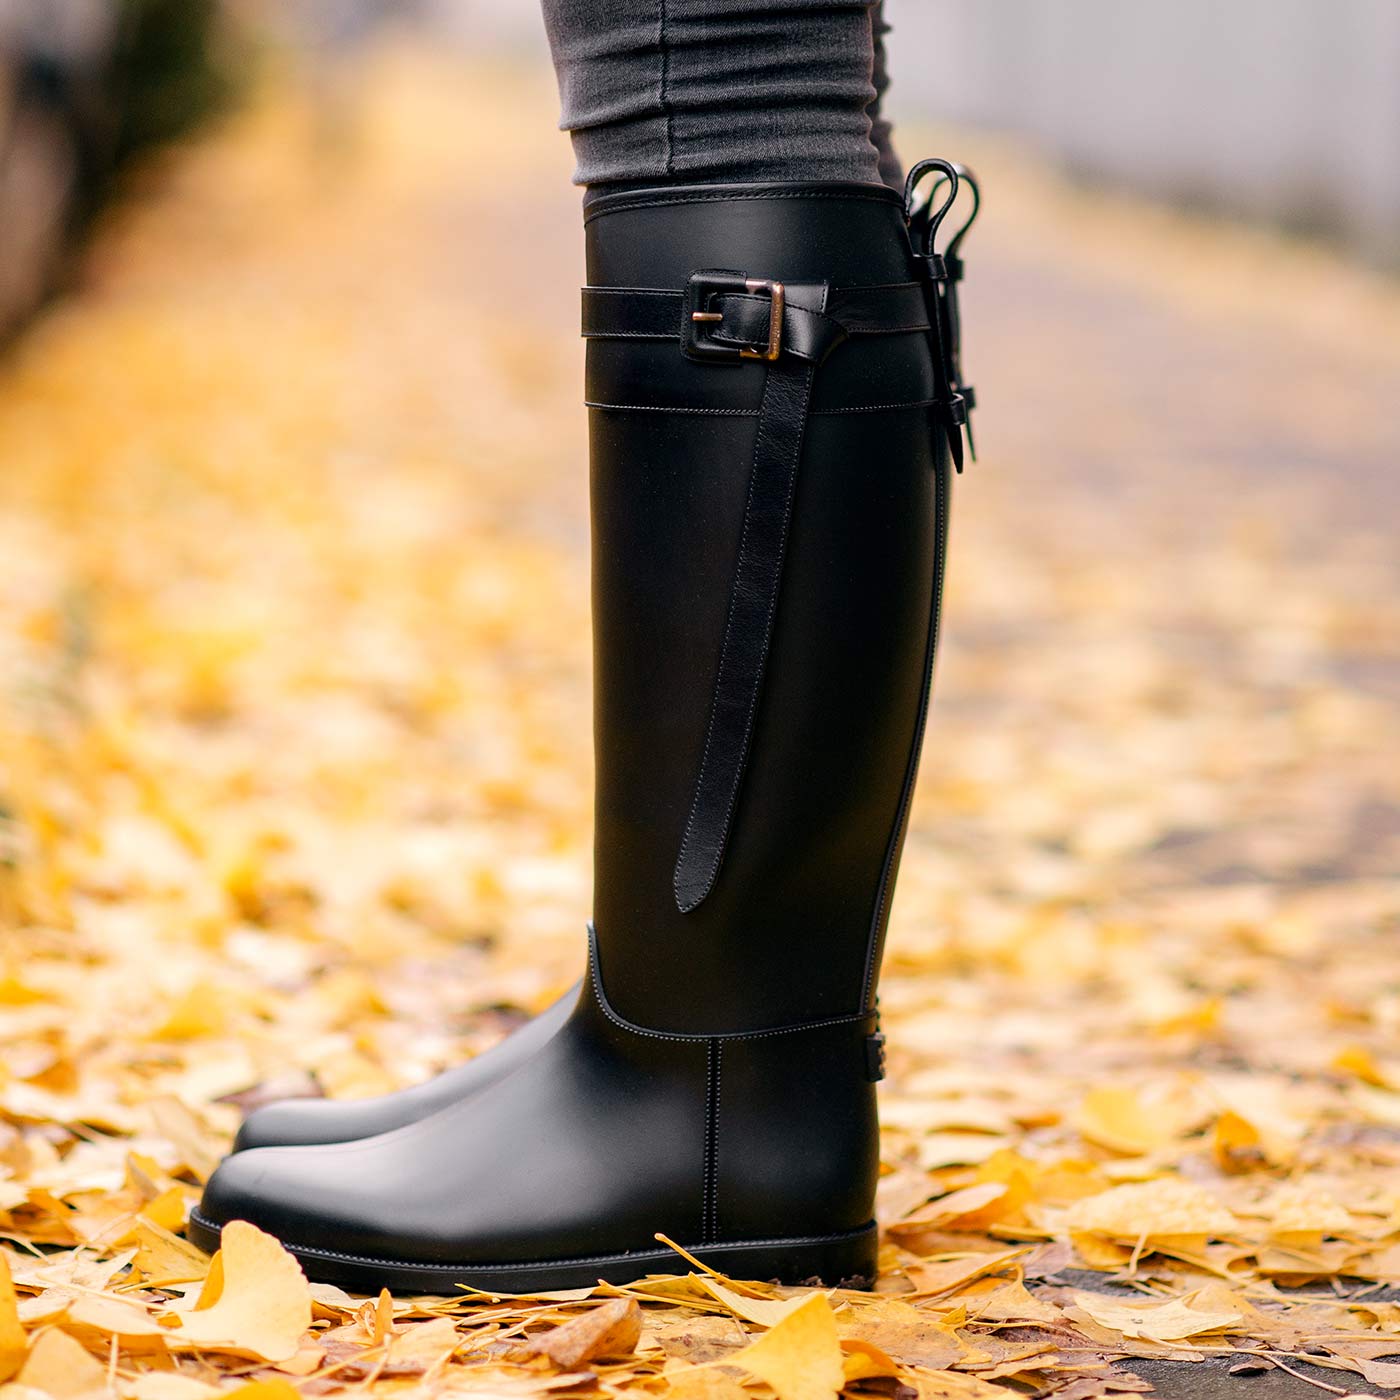 burberry-rain-boots-005